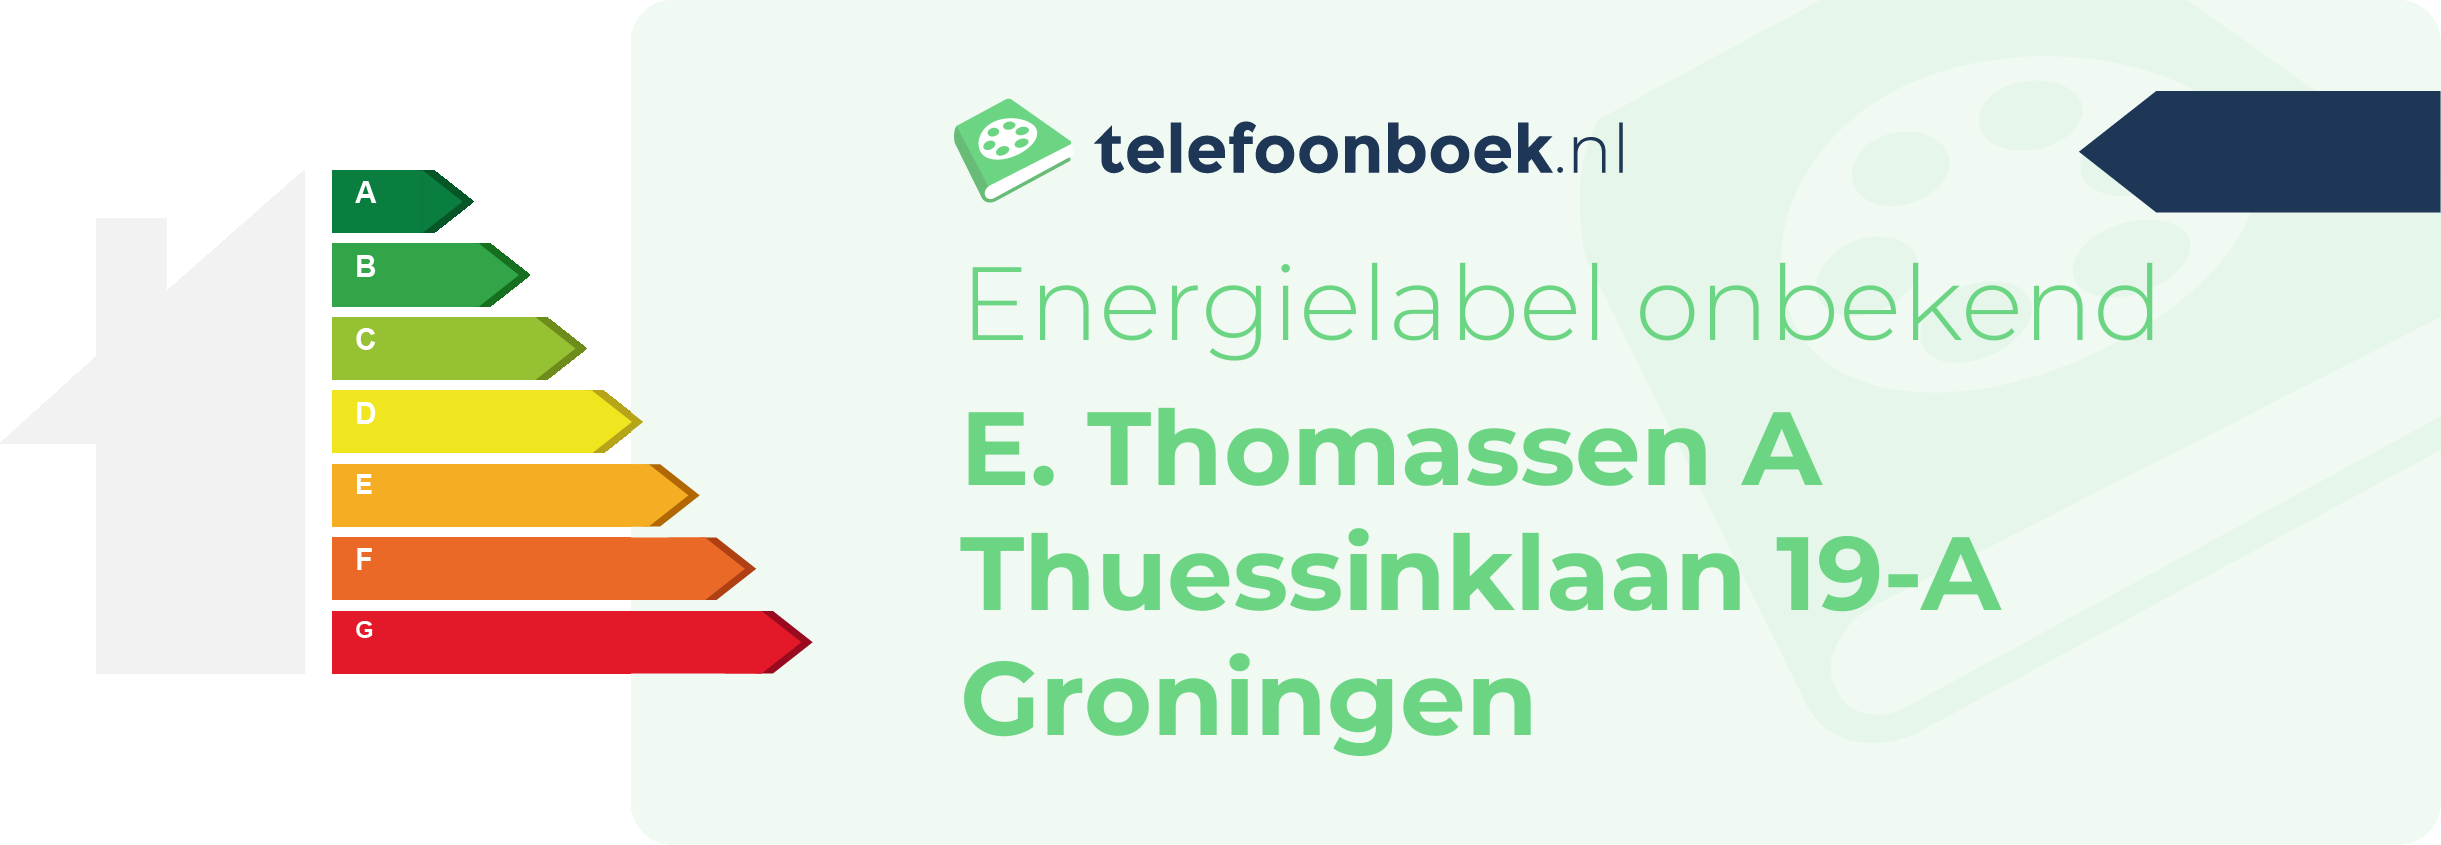 Energielabel E. Thomassen A Thuessinklaan 19-A Groningen